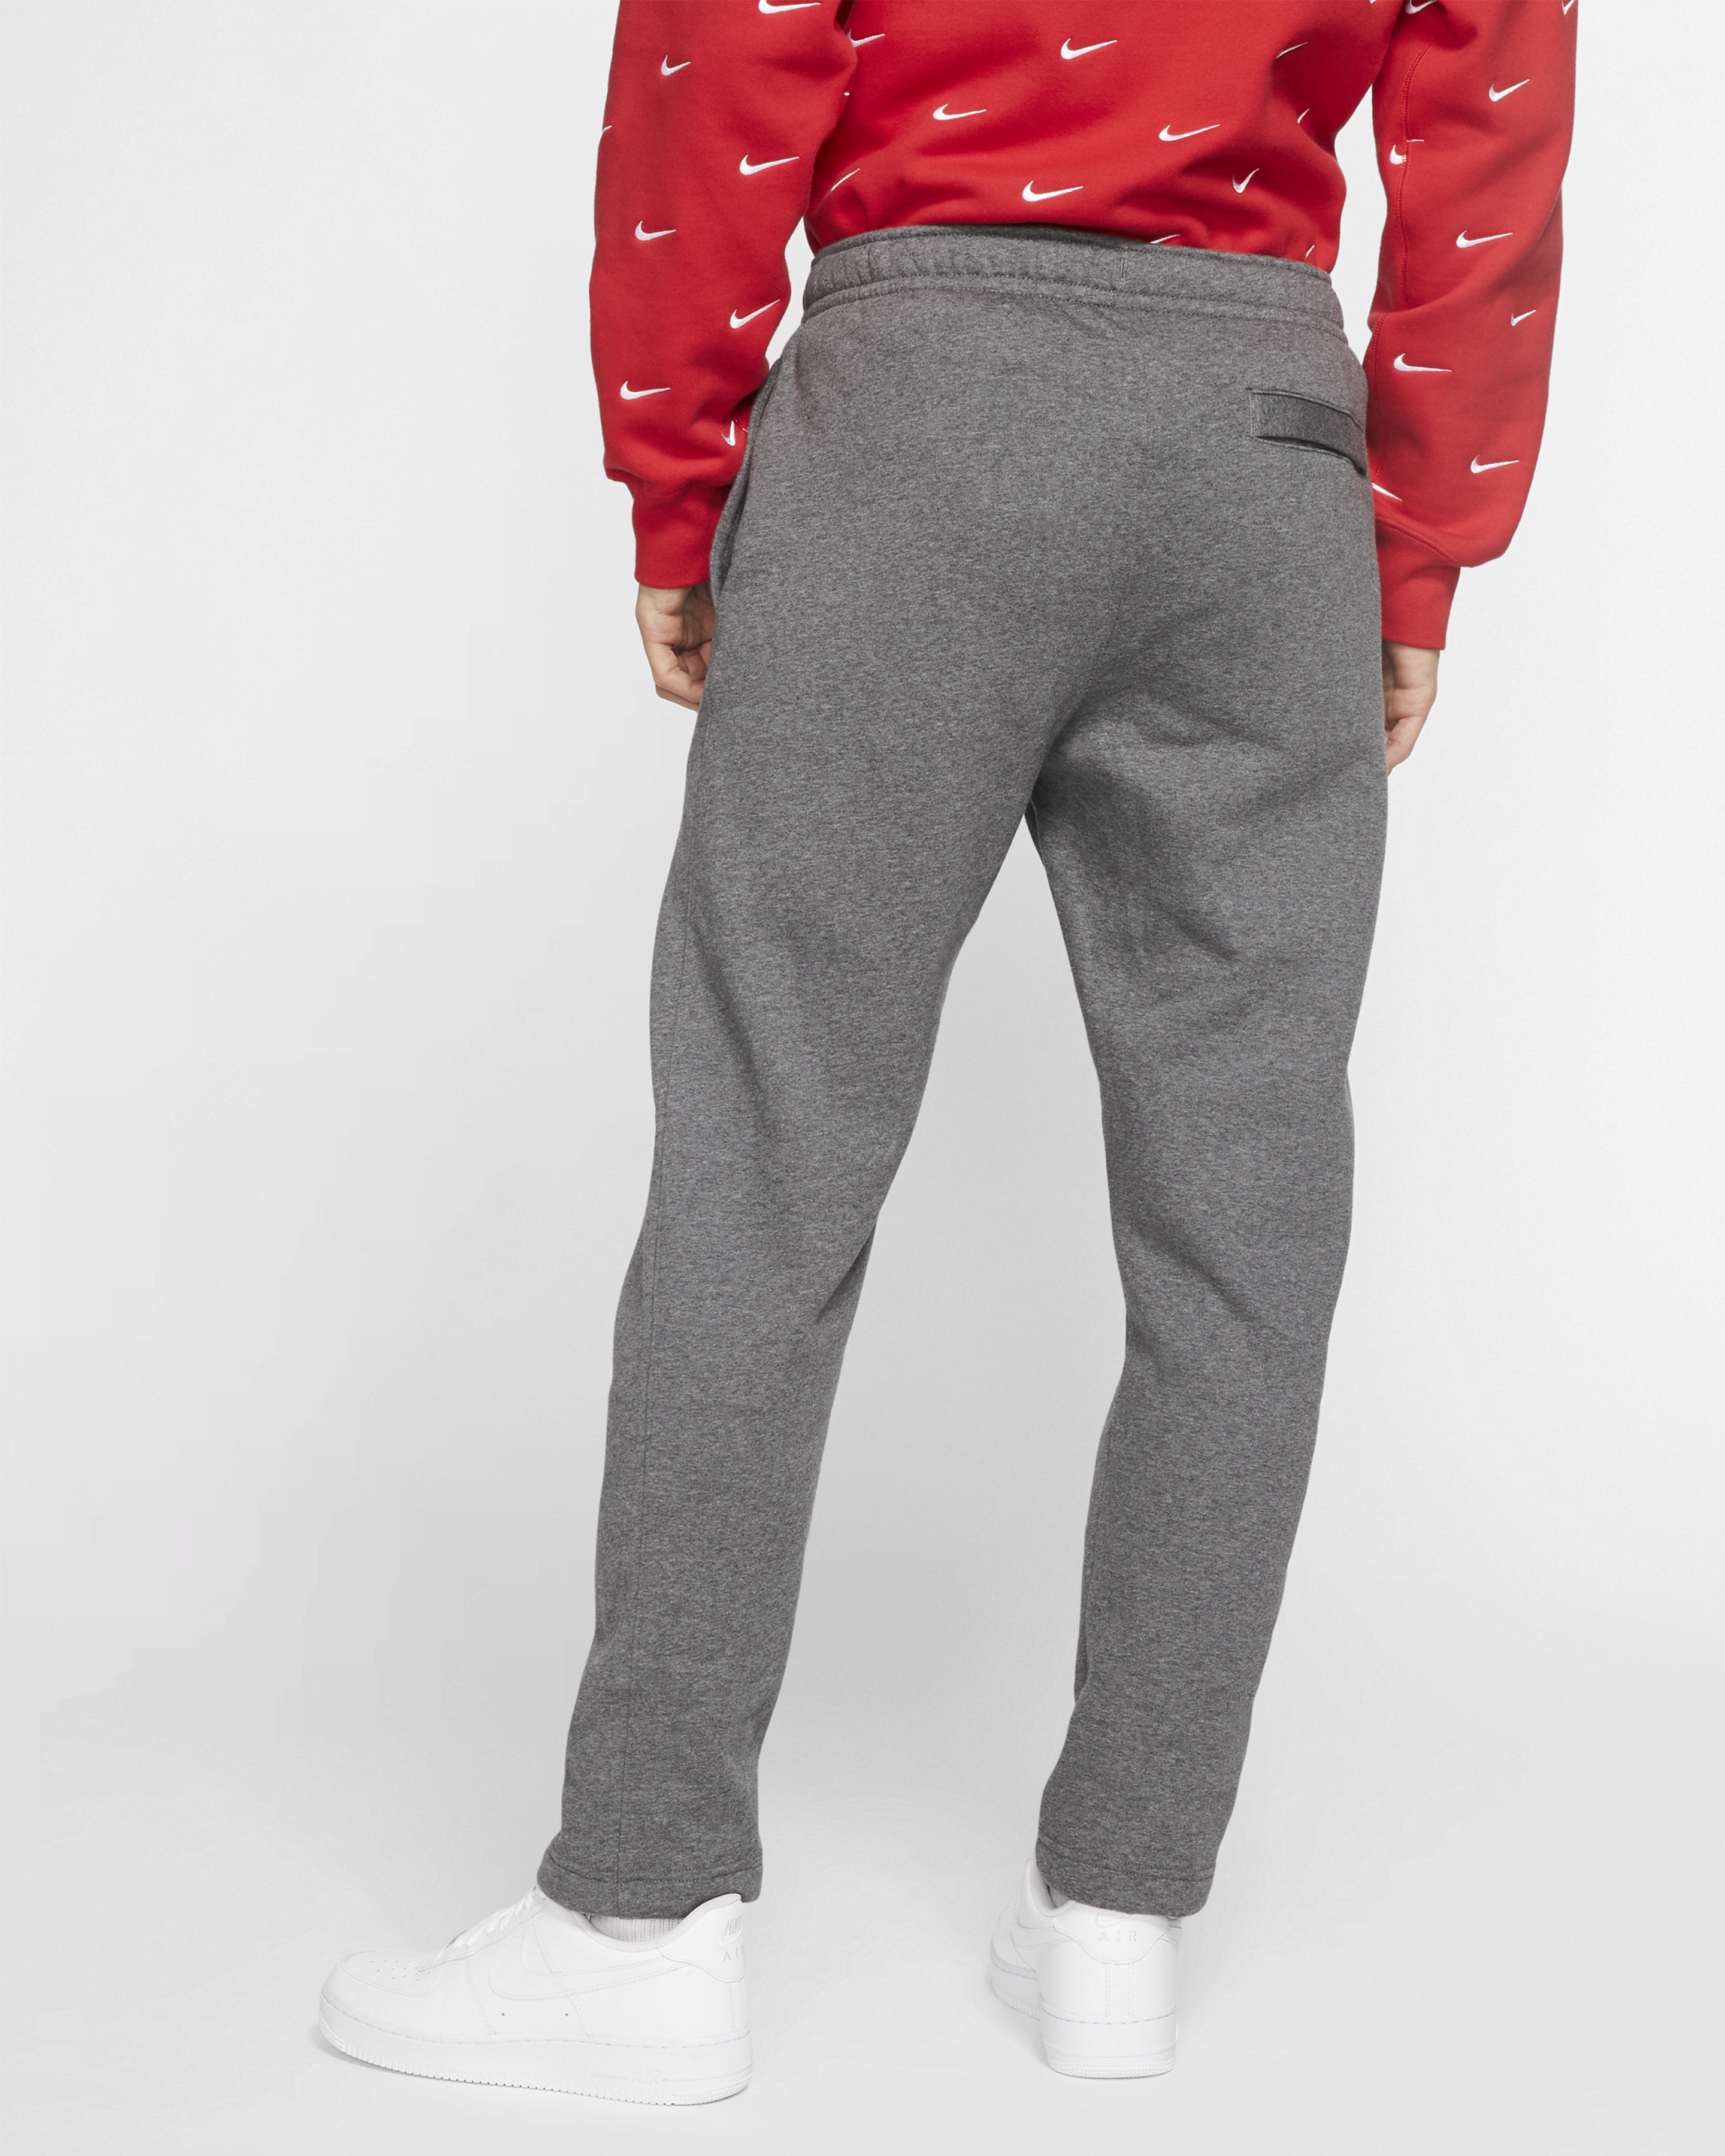 Southpole Sweatpants Men's Small 100% Polyester Fleece Stretch Drawstring S